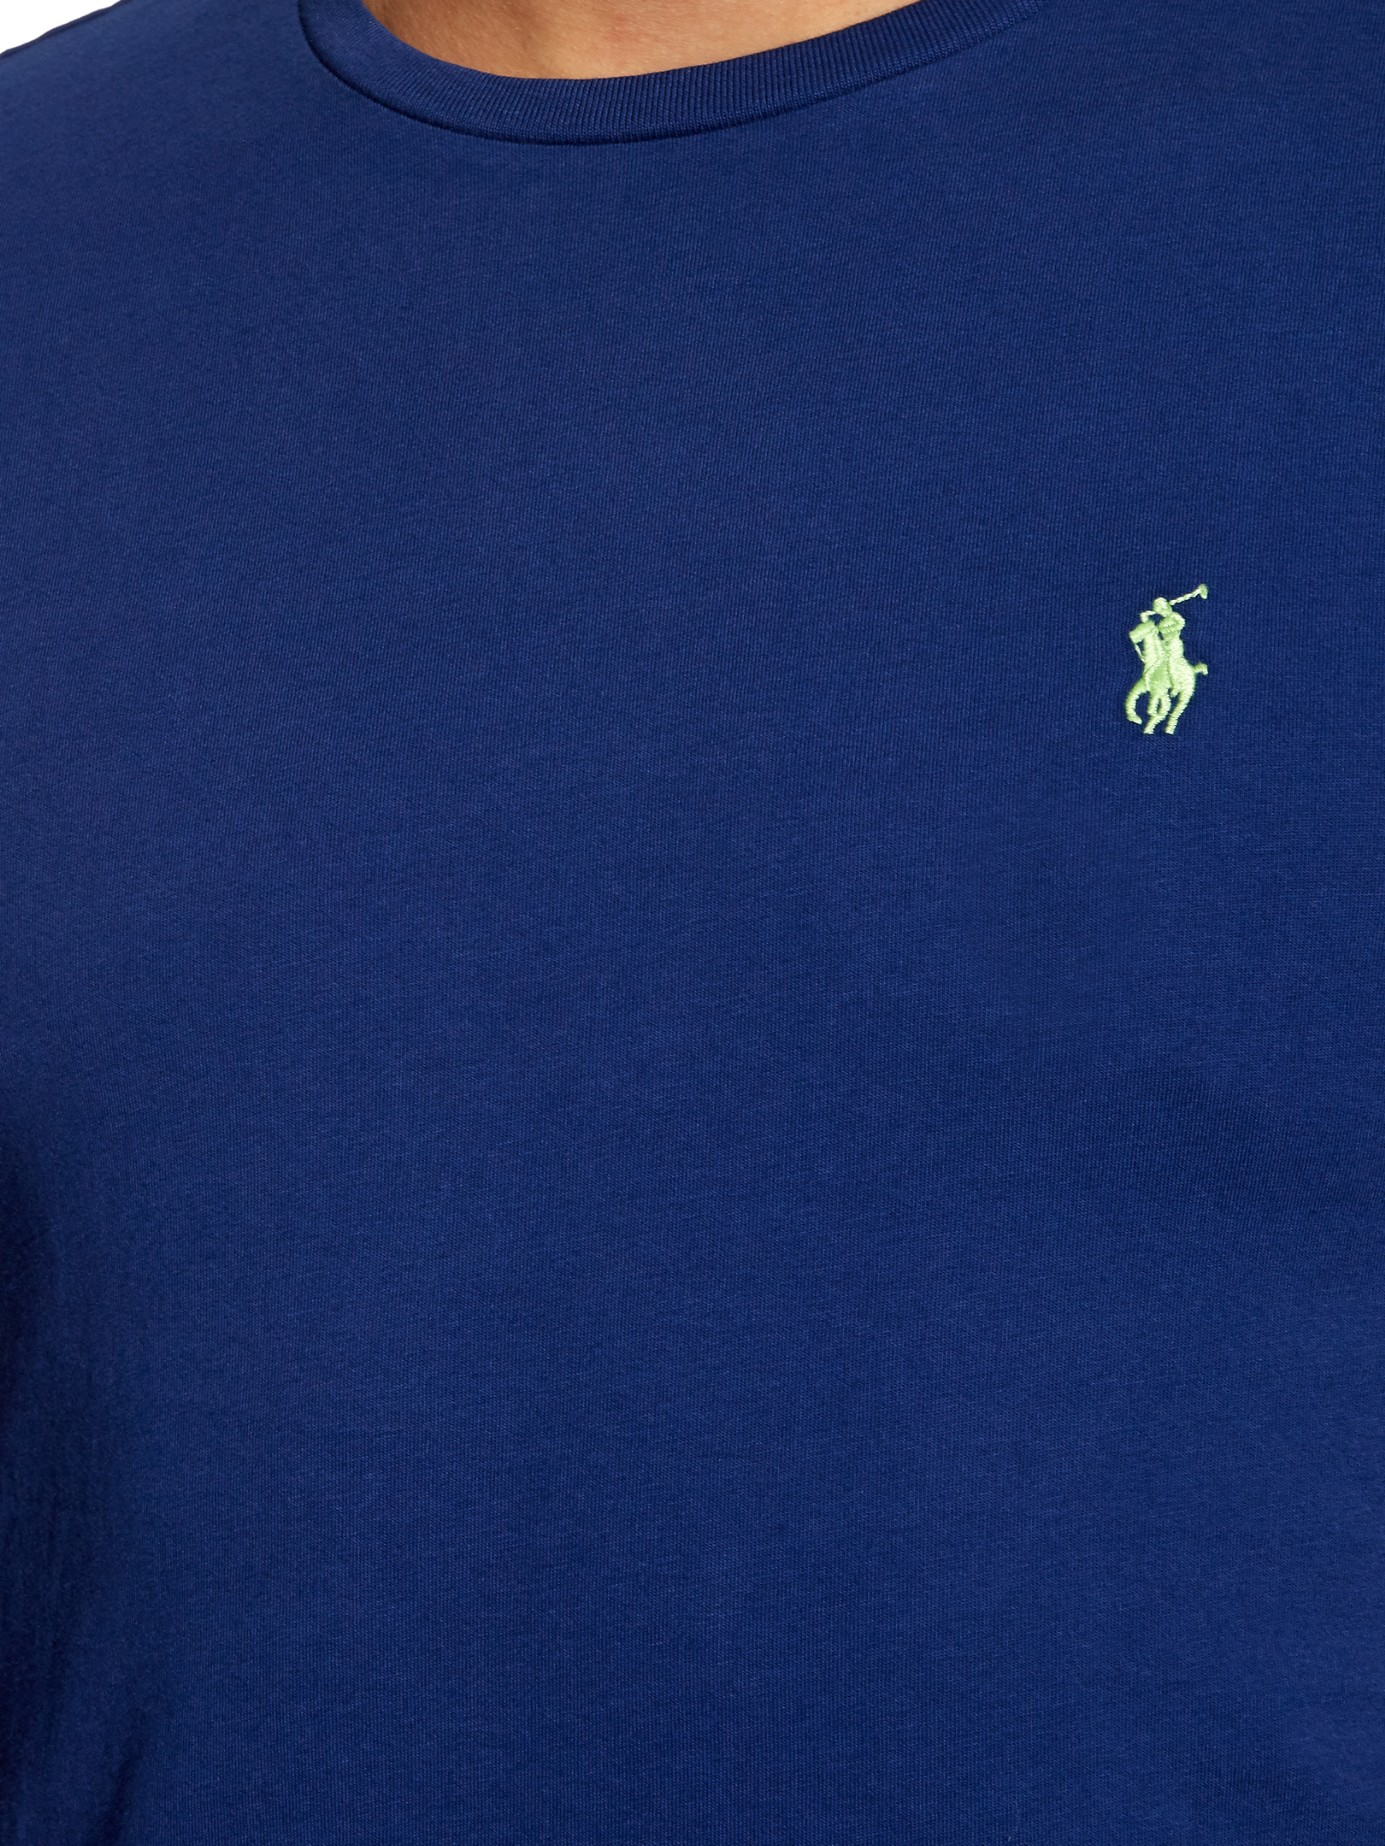 Polo ralph lauren Crew-neck T-shirt in Blue for Men | Lyst